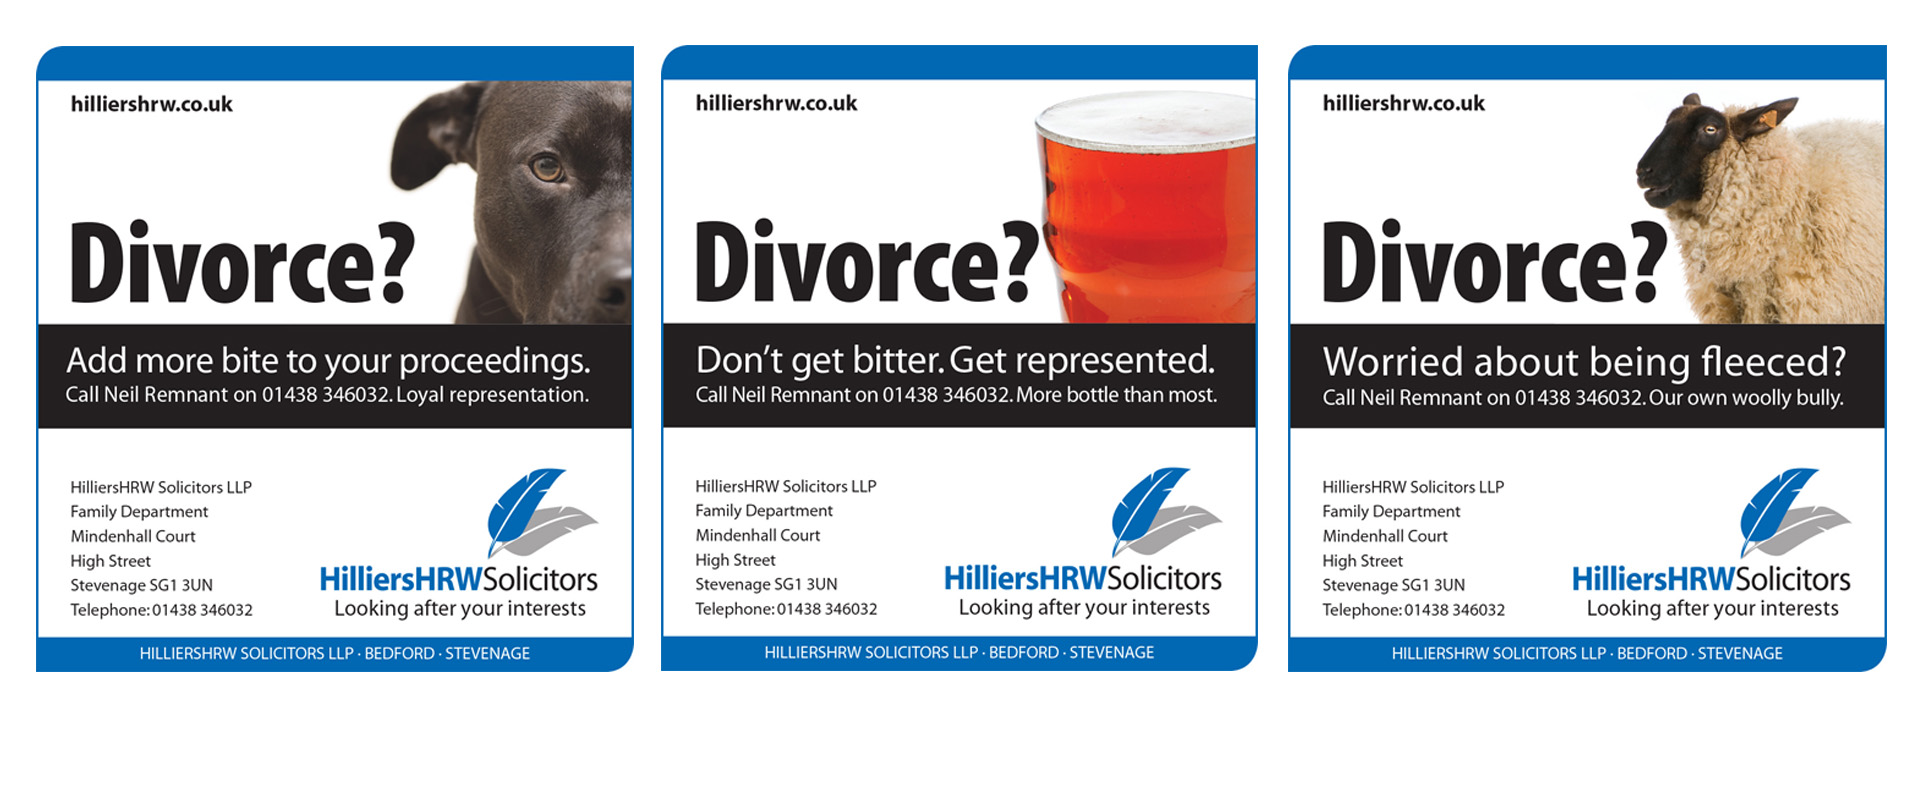 Divorce Ad Campaign